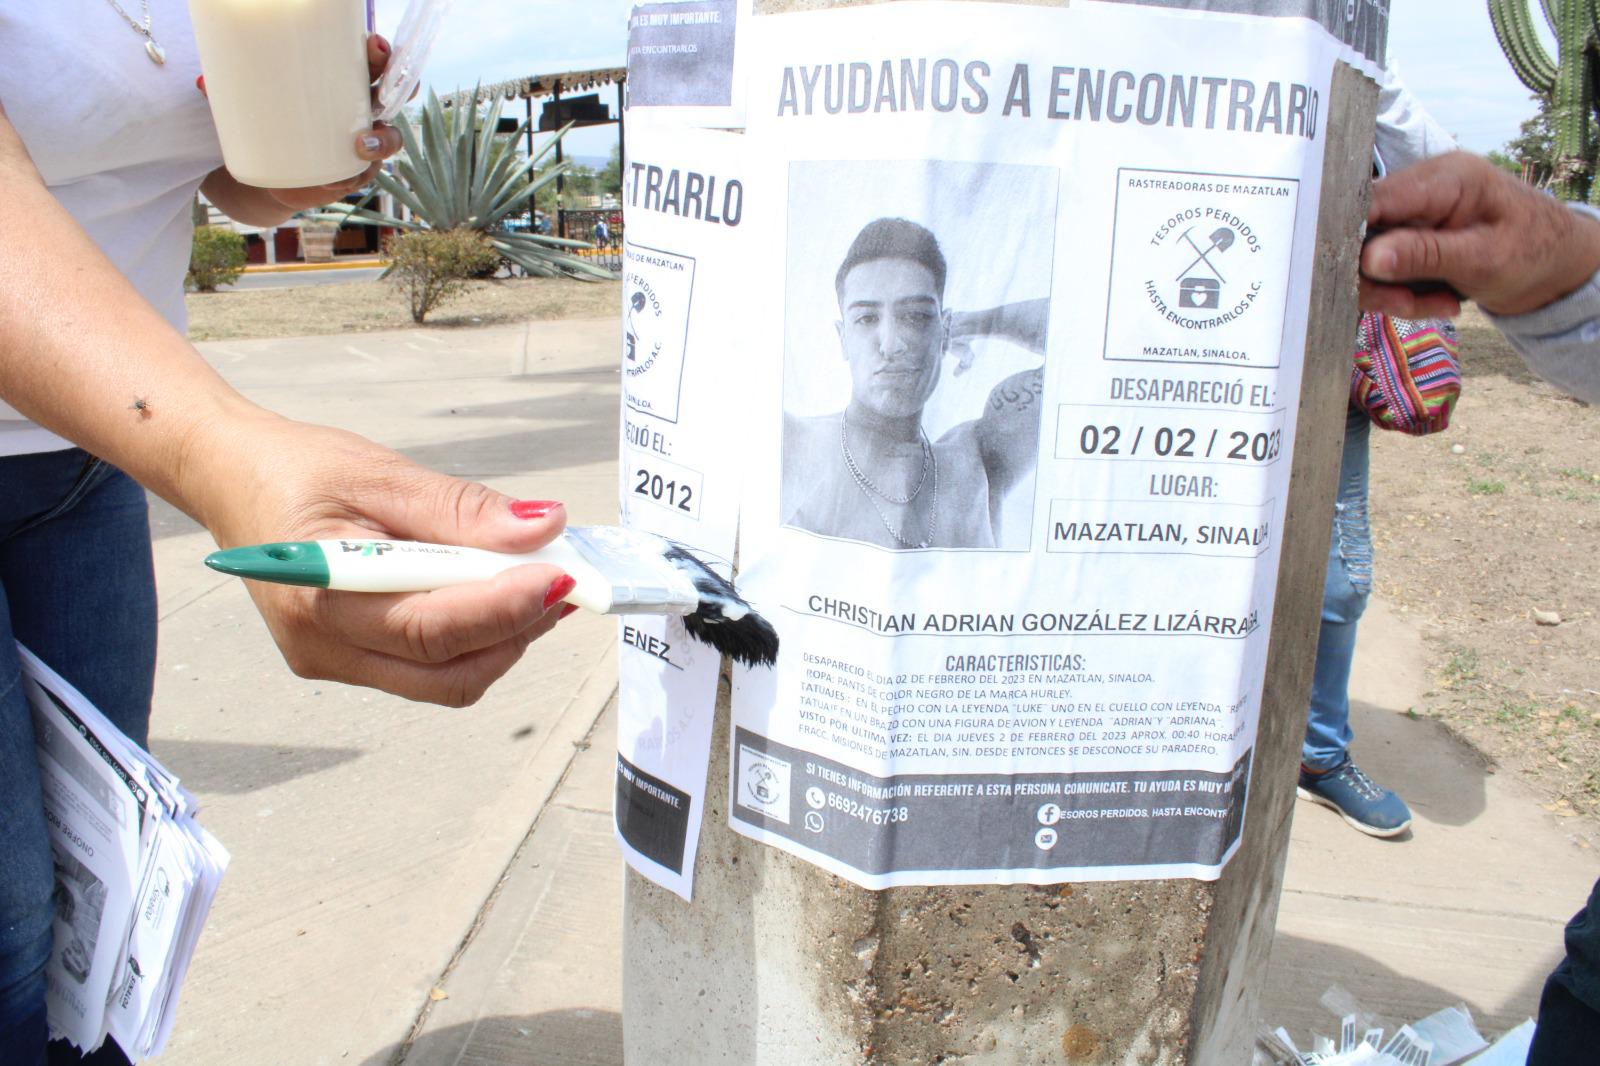 $!Lamenta grupo de rastreadoras que se arranquen carteles de sus desaparecidos